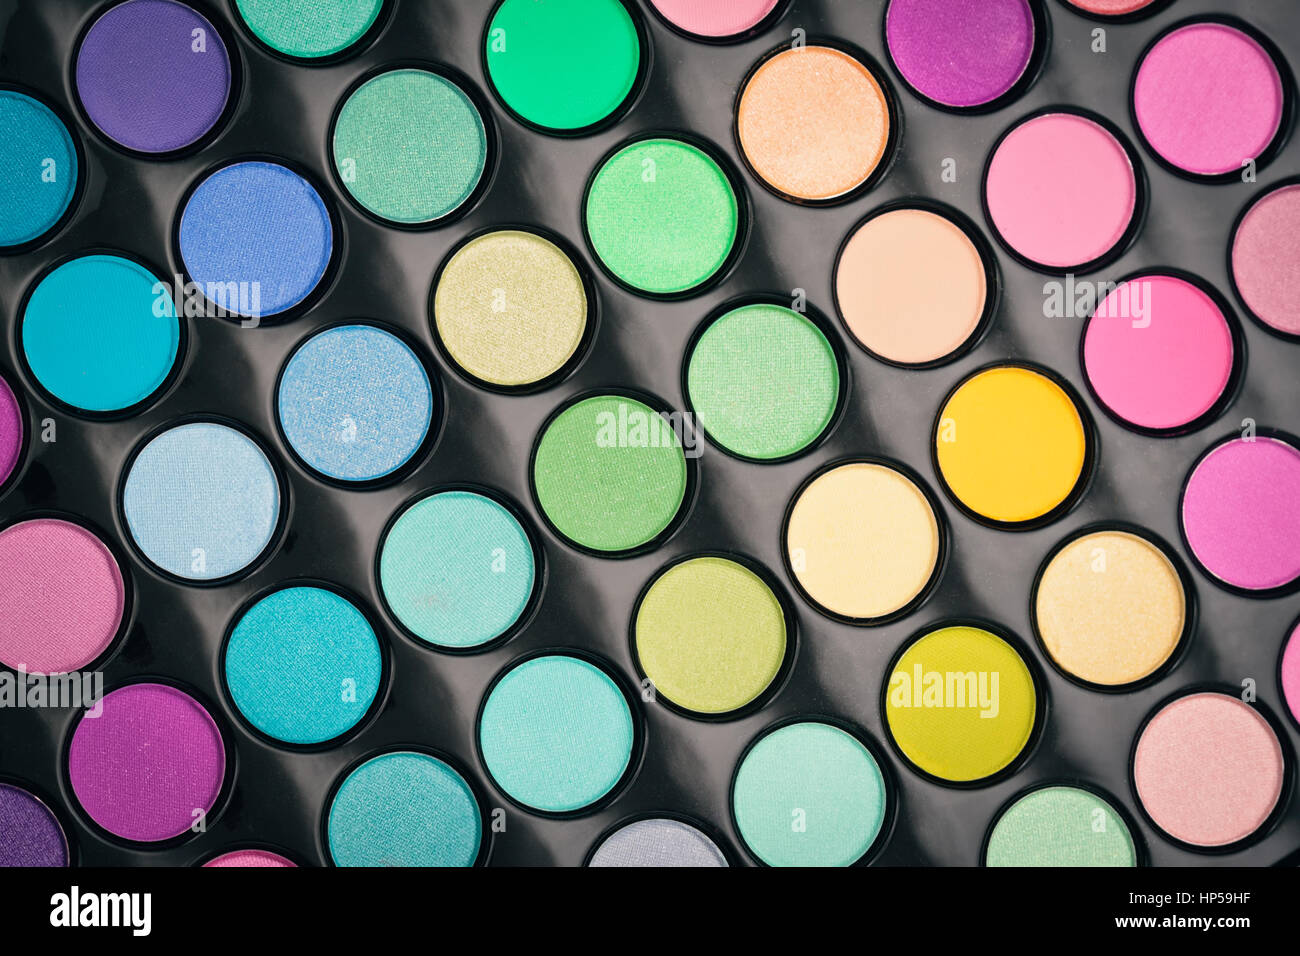 Download Beautiful Glossy Make Up Powder Background Makeup Eyeshadow Palette Stock Photo Alamy